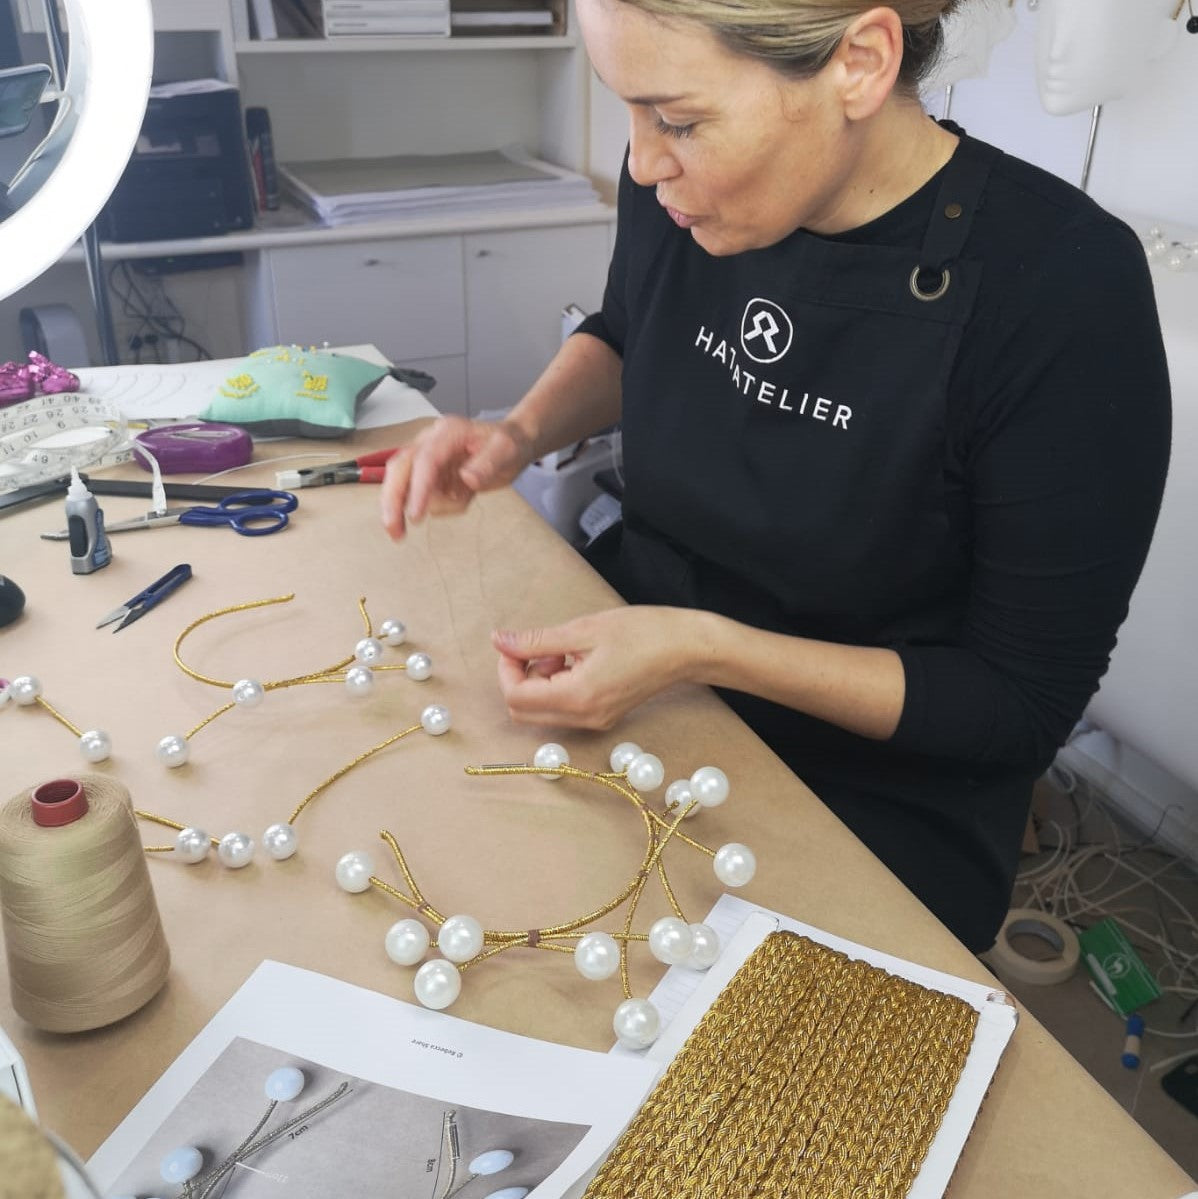 Milliner Rebecca Share working in her studio on bridal millinery headwear